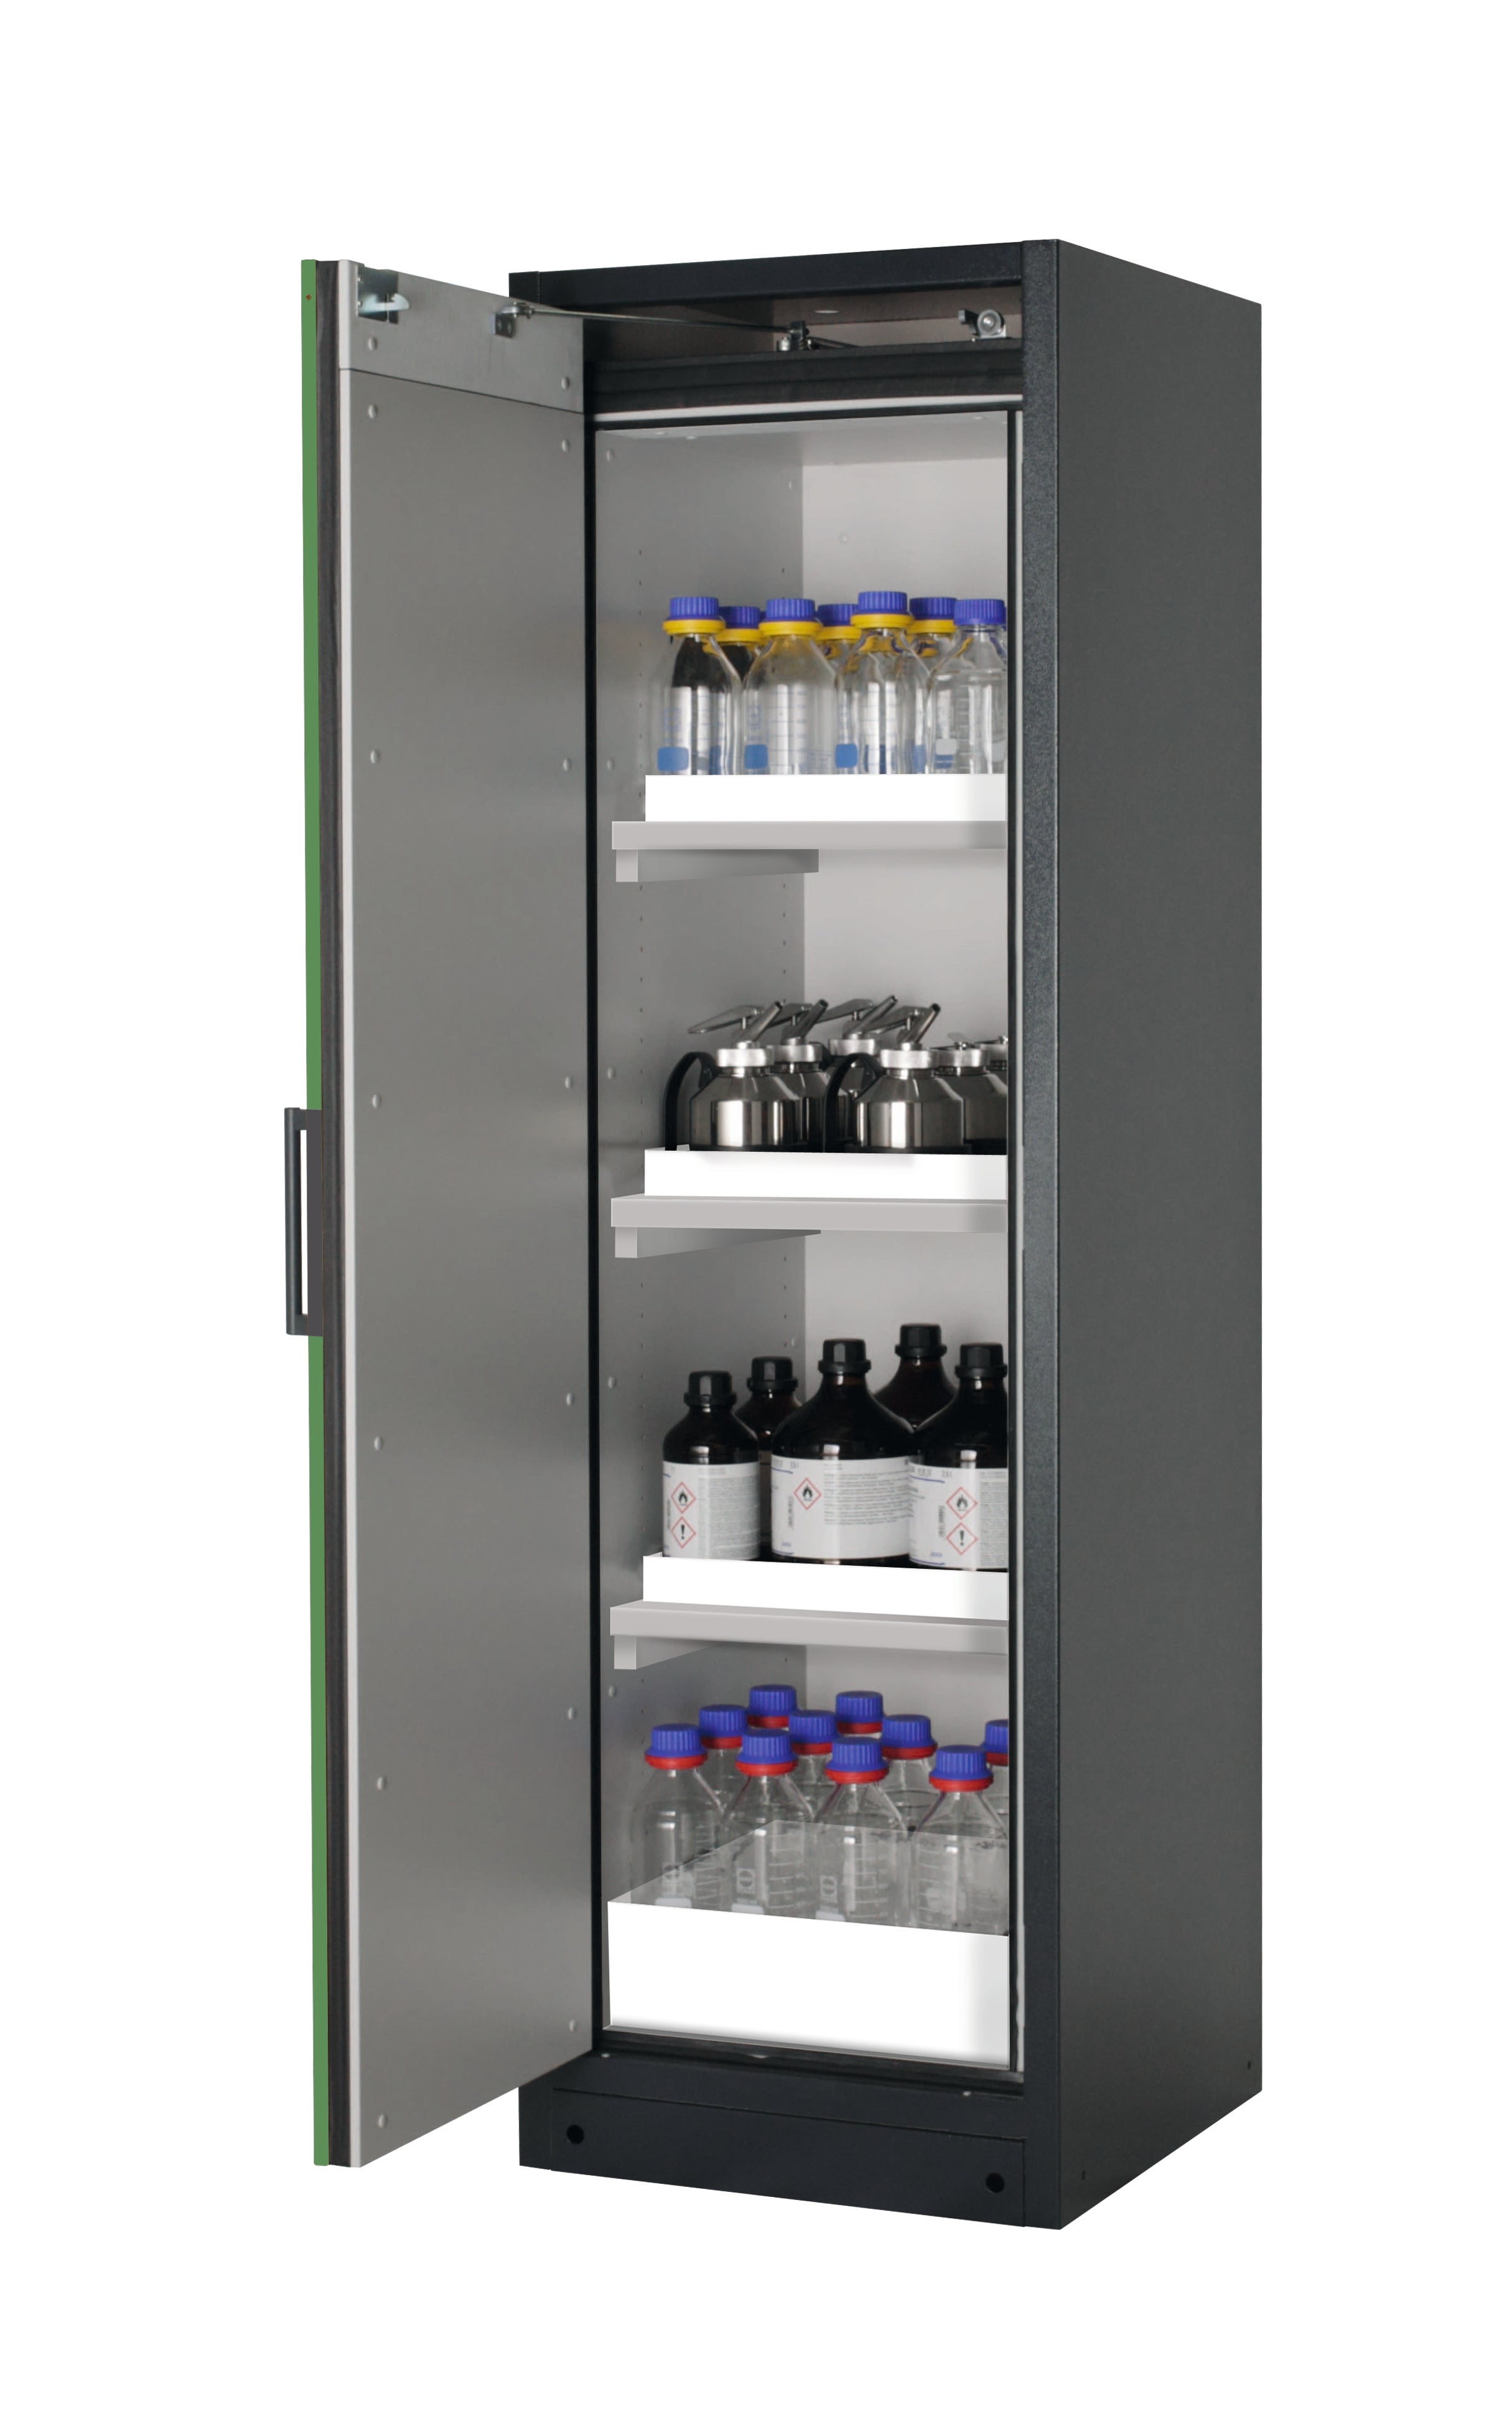 Type 90 safety storage cabinet Q-PEGASUS-90 model Q90.195.060.WDAC in reseda green RAL 6011 with 3x tray shelf (standard) (polypropylene),